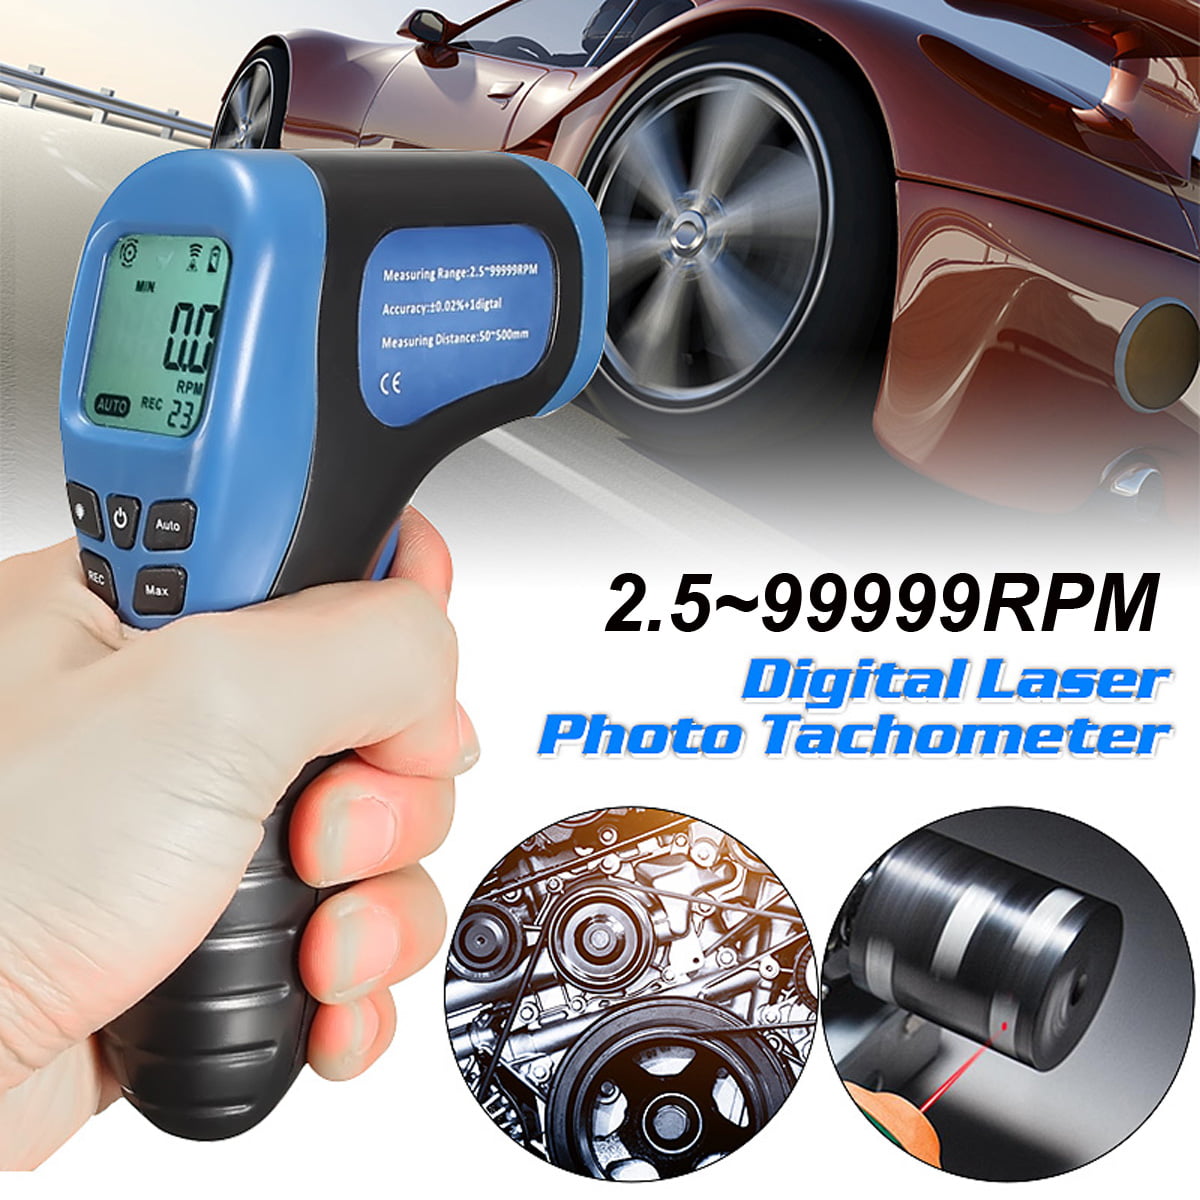 Digital Tachometer Laser Photo Gun RPM Non-Contact Tach Tester Meter Speed Gauge 